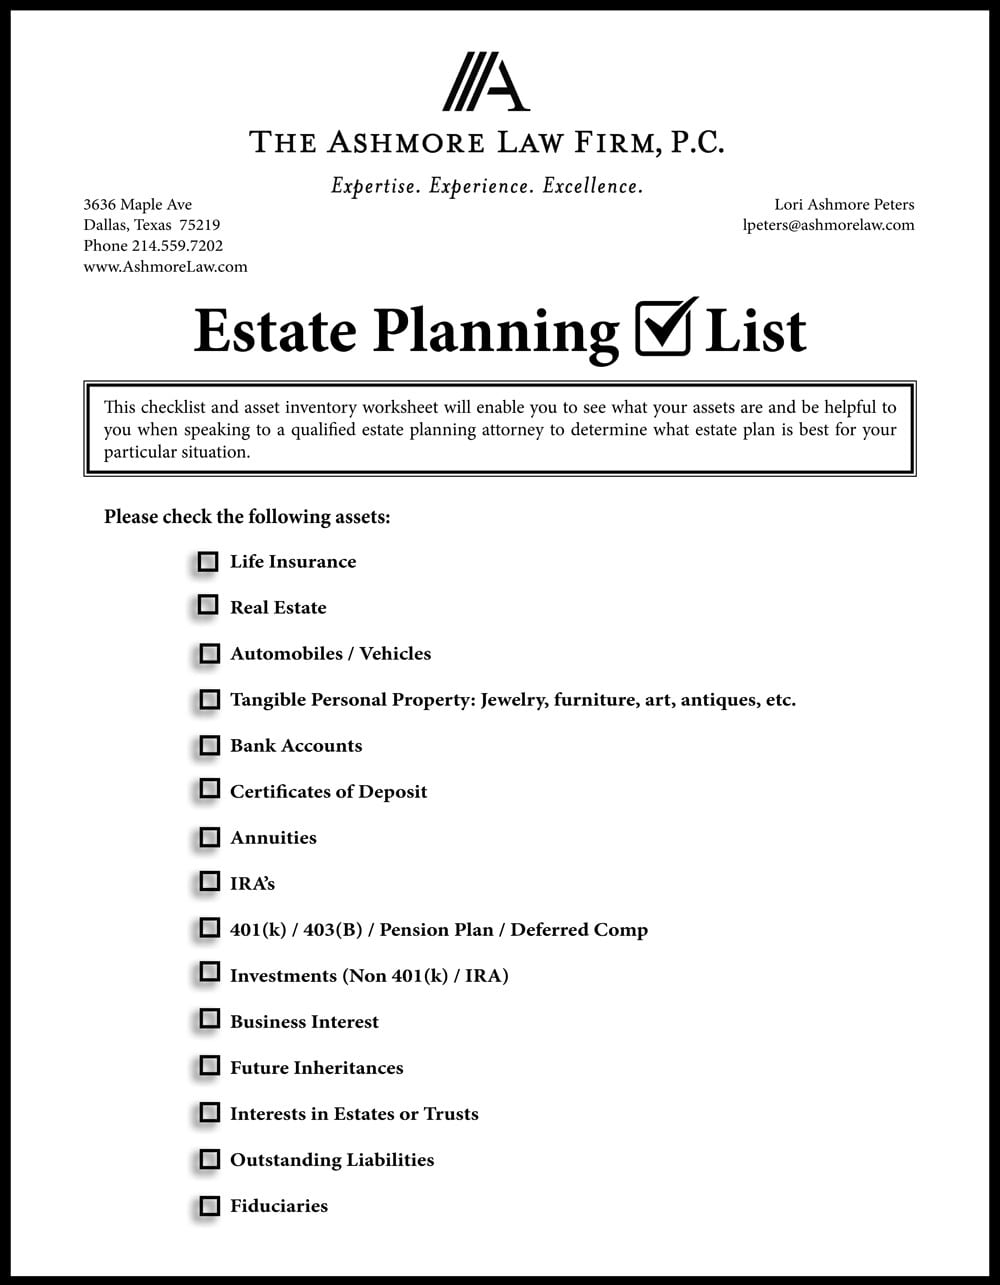 Estate Planning Checklist And Asset Inventory Worksheet